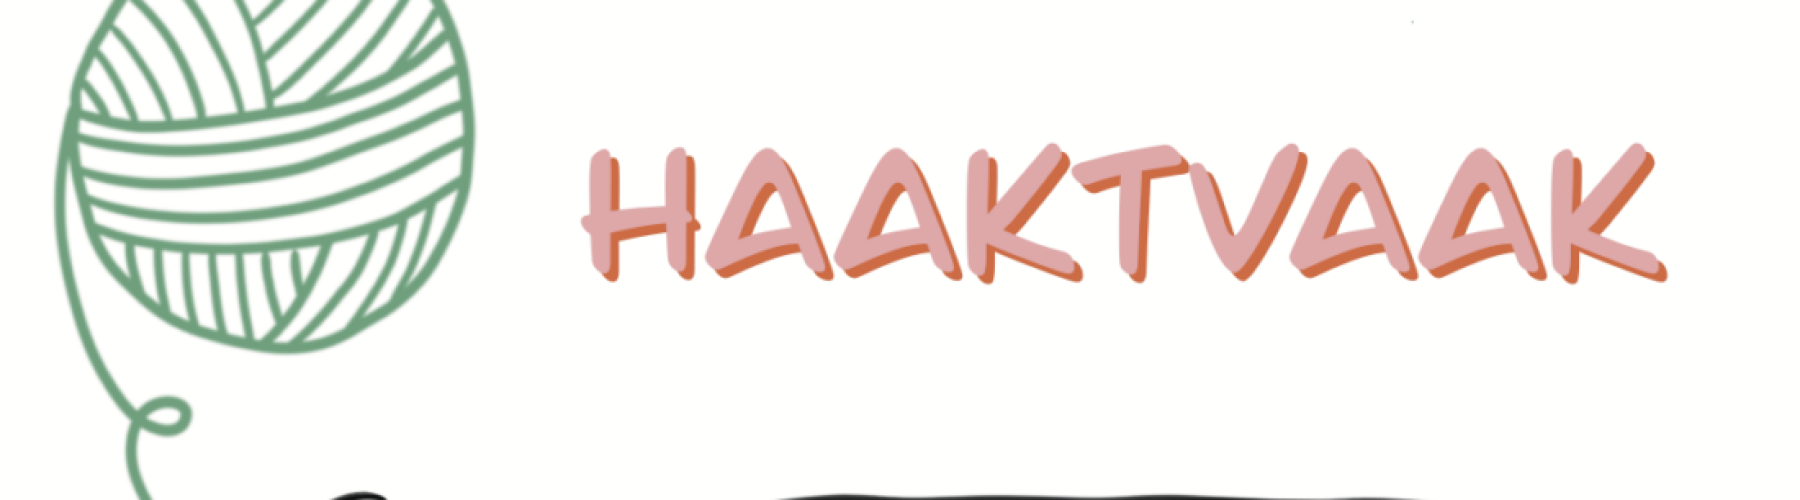 cropped-logo-haaktvaak-extra-wit.png